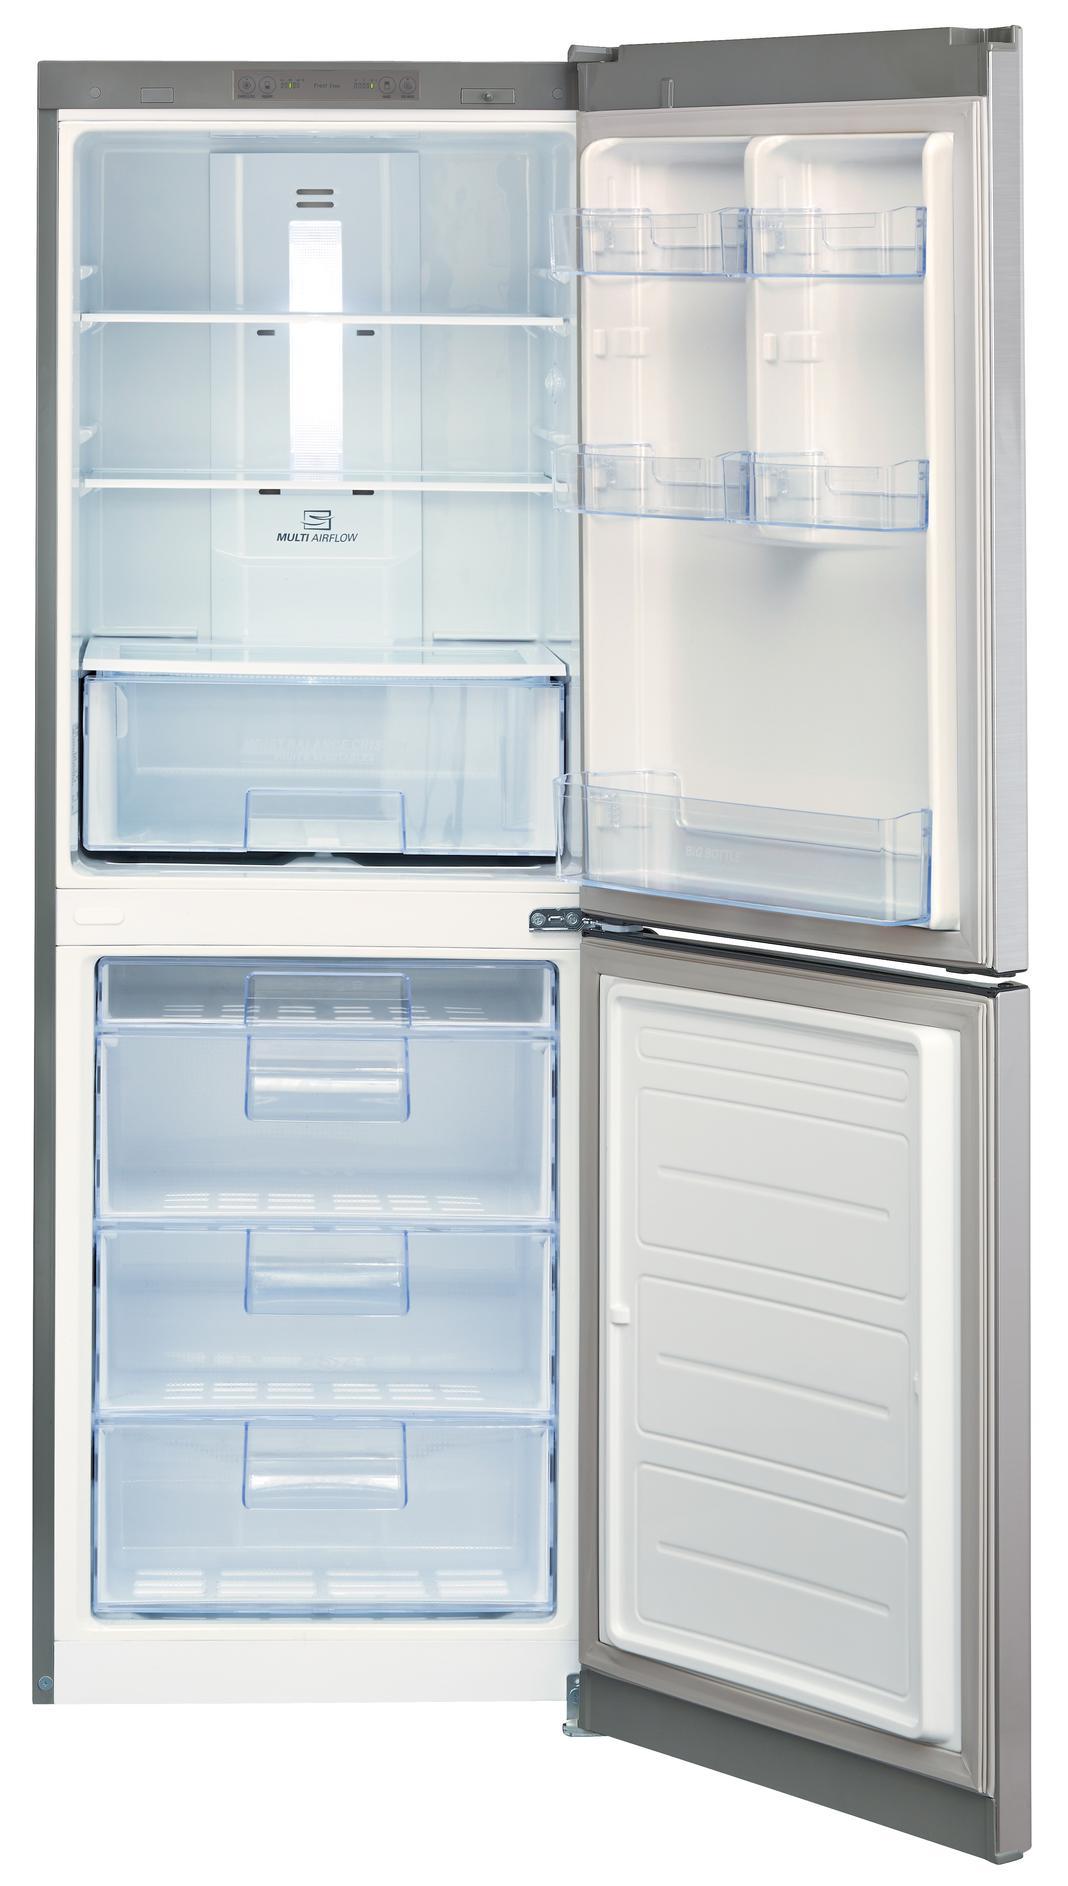 LG - 23.5 Inch 10.1 cu. ft Bottom Mount Refrigerator in Silver - LBNC10551V